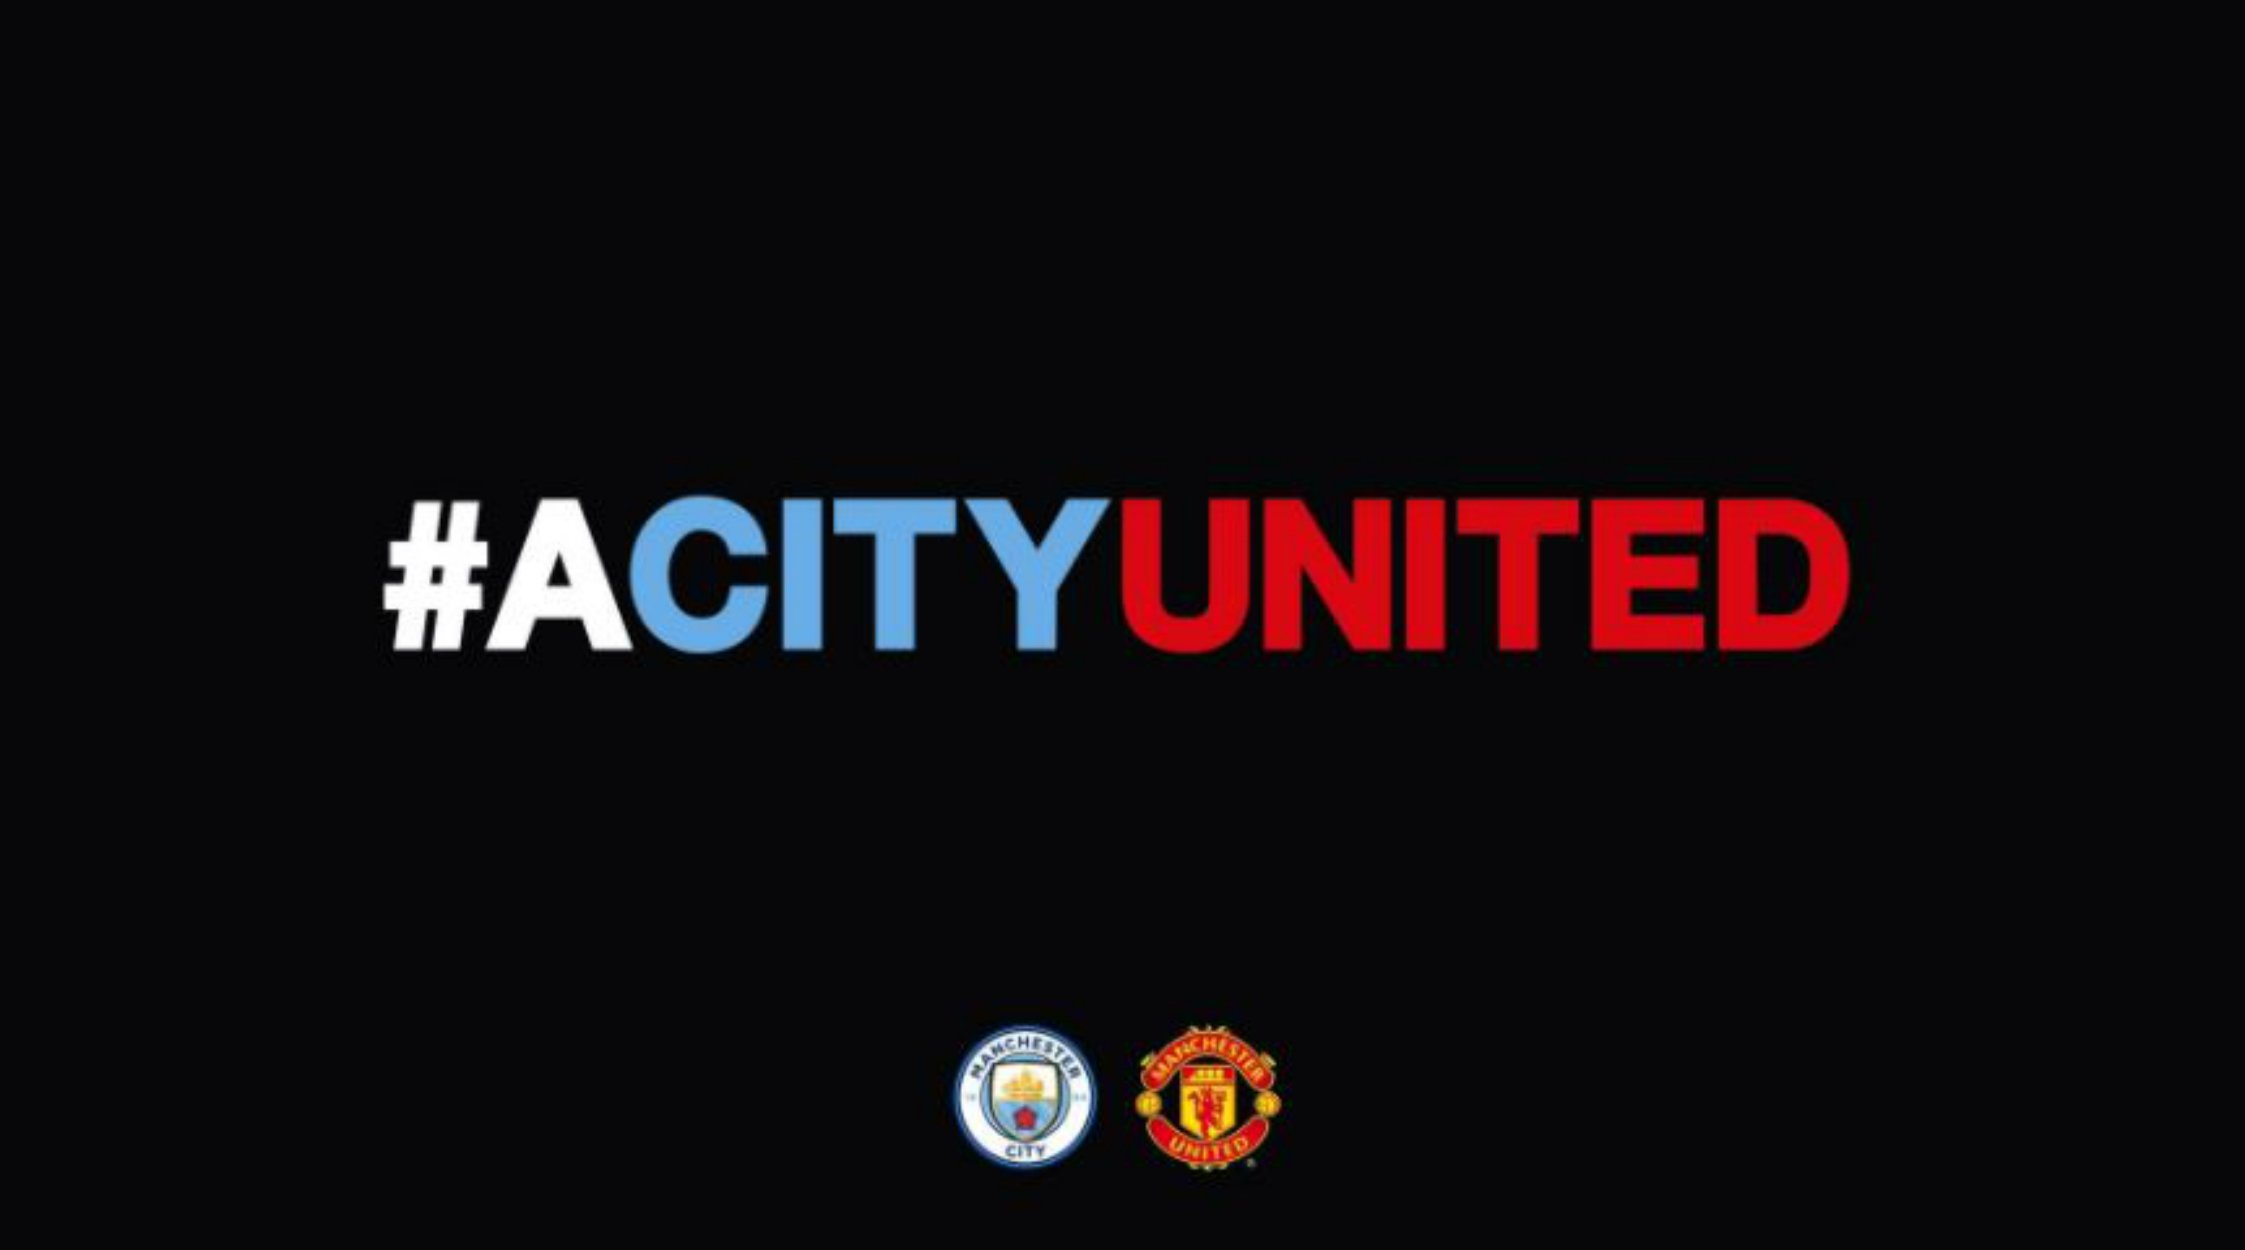 La emotiva dedicatoria del City al United después del atentado de Manchester